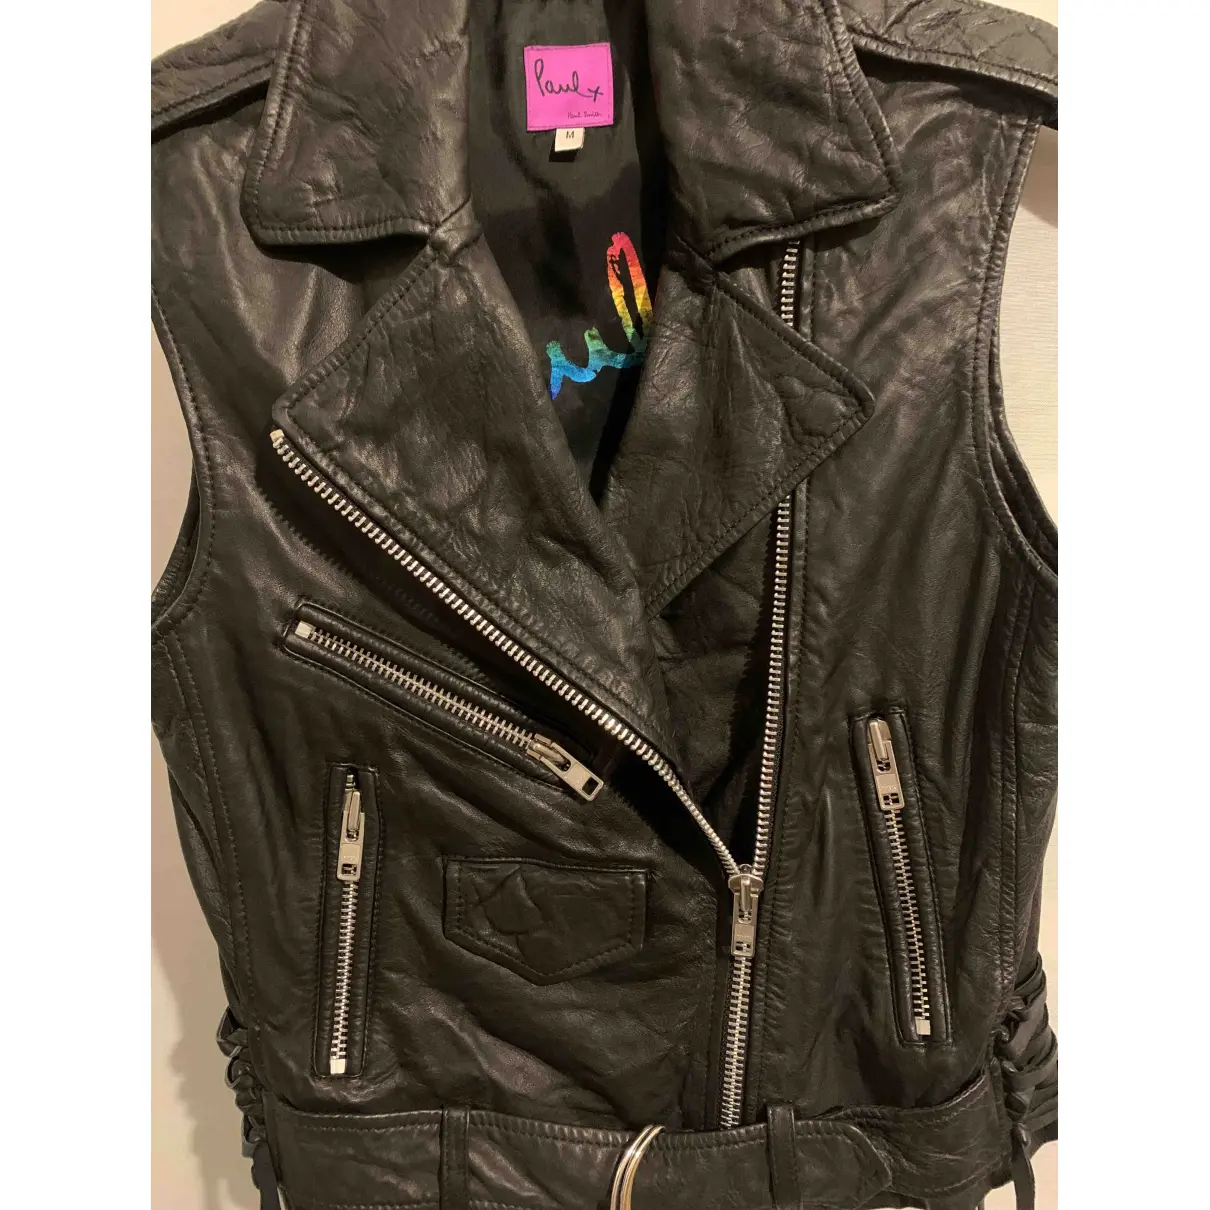 Buy Paul Smith Leather cardi coat online